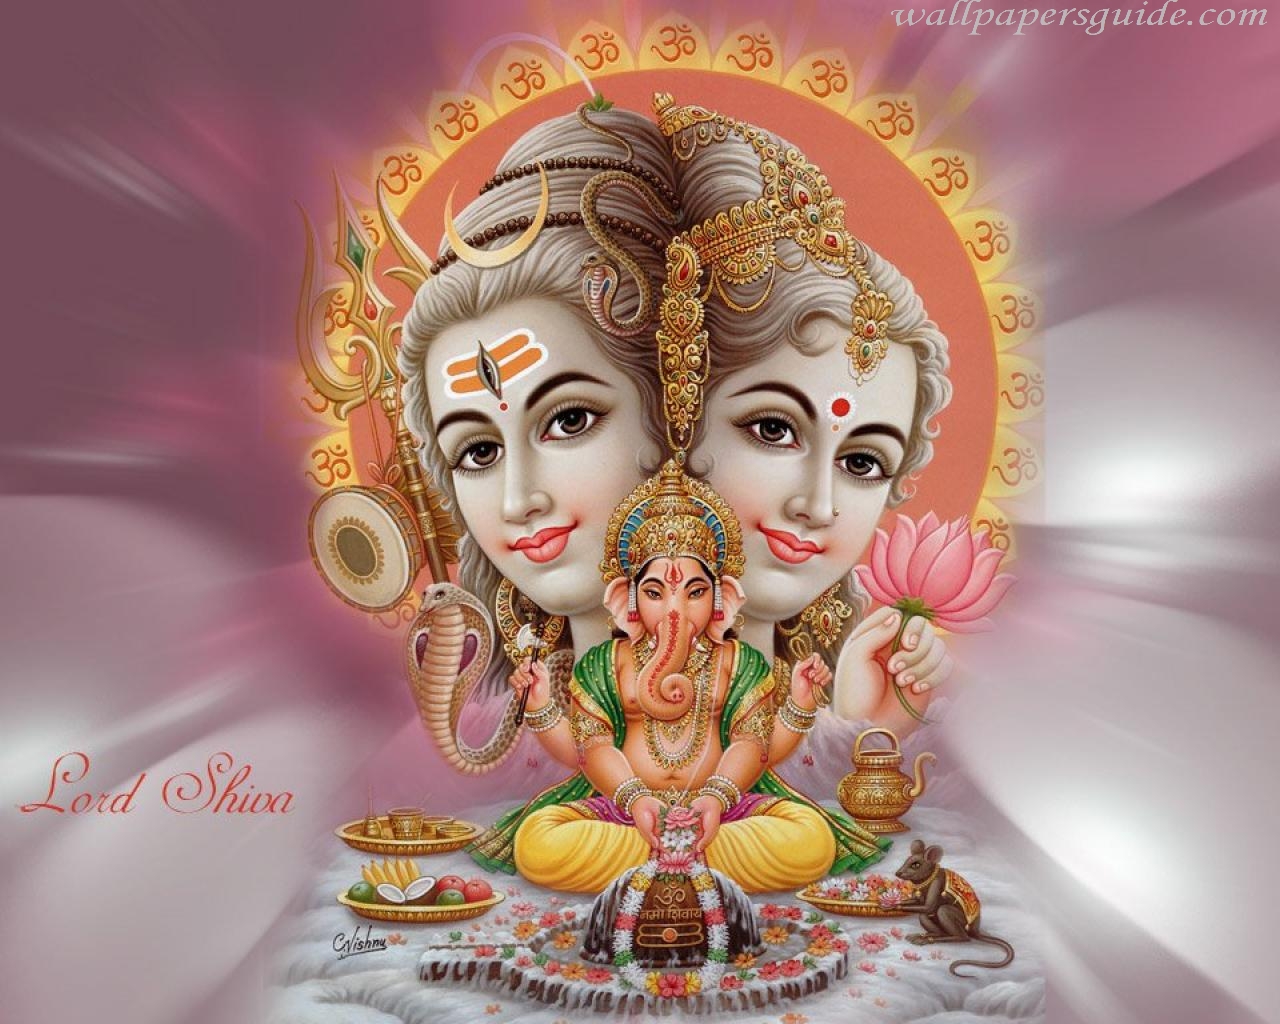  Latest Full HD Quality Desktop Wallpapers Hindu Gods HD Wallpapers